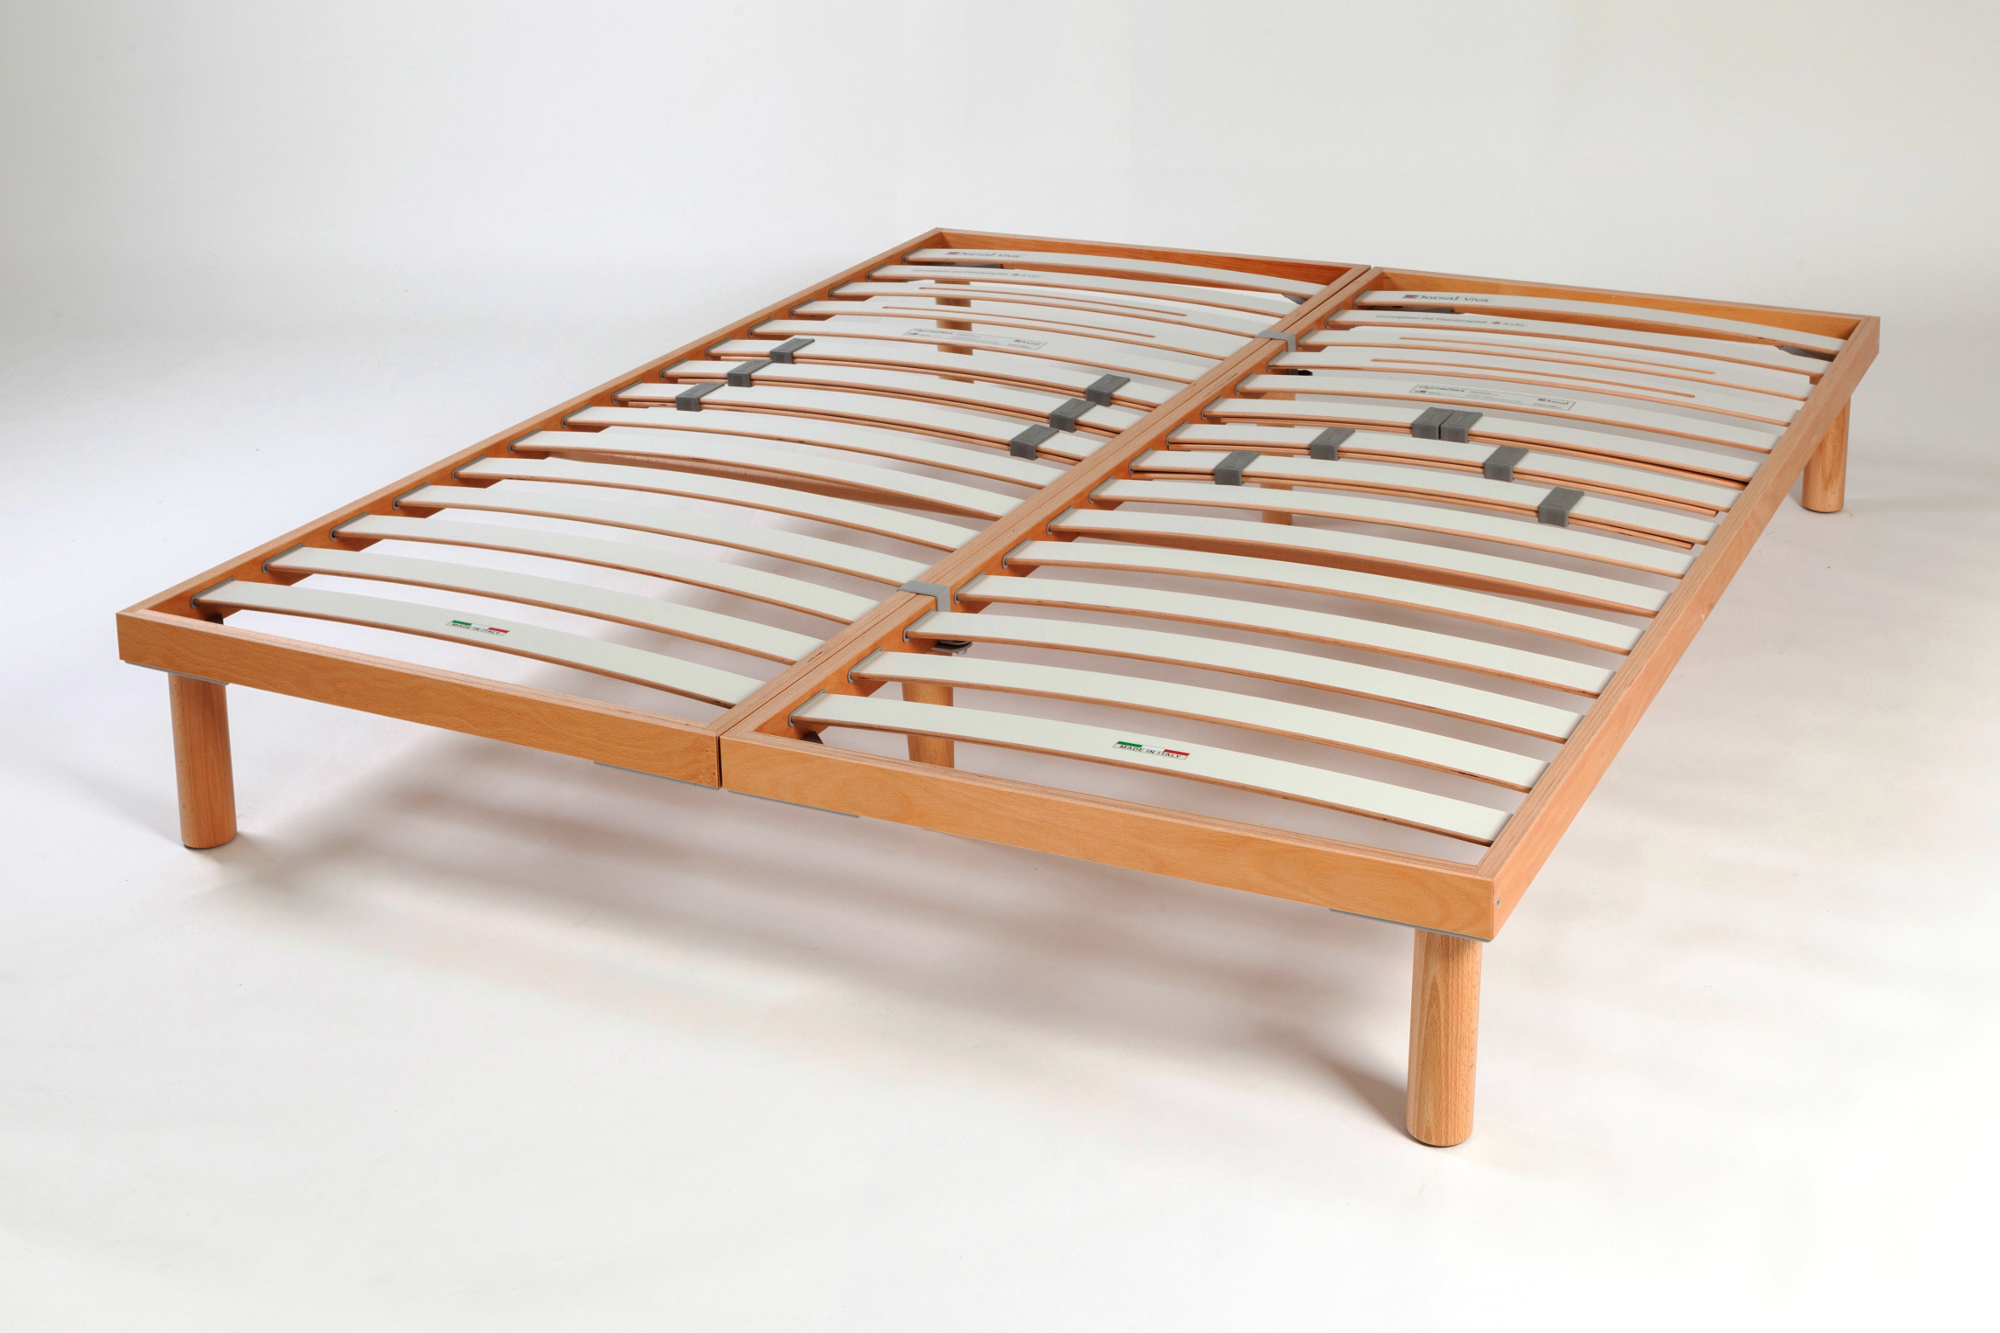 Dorsal Flexi Slat Frame Futonz, Are Wooden Slat Beds Good